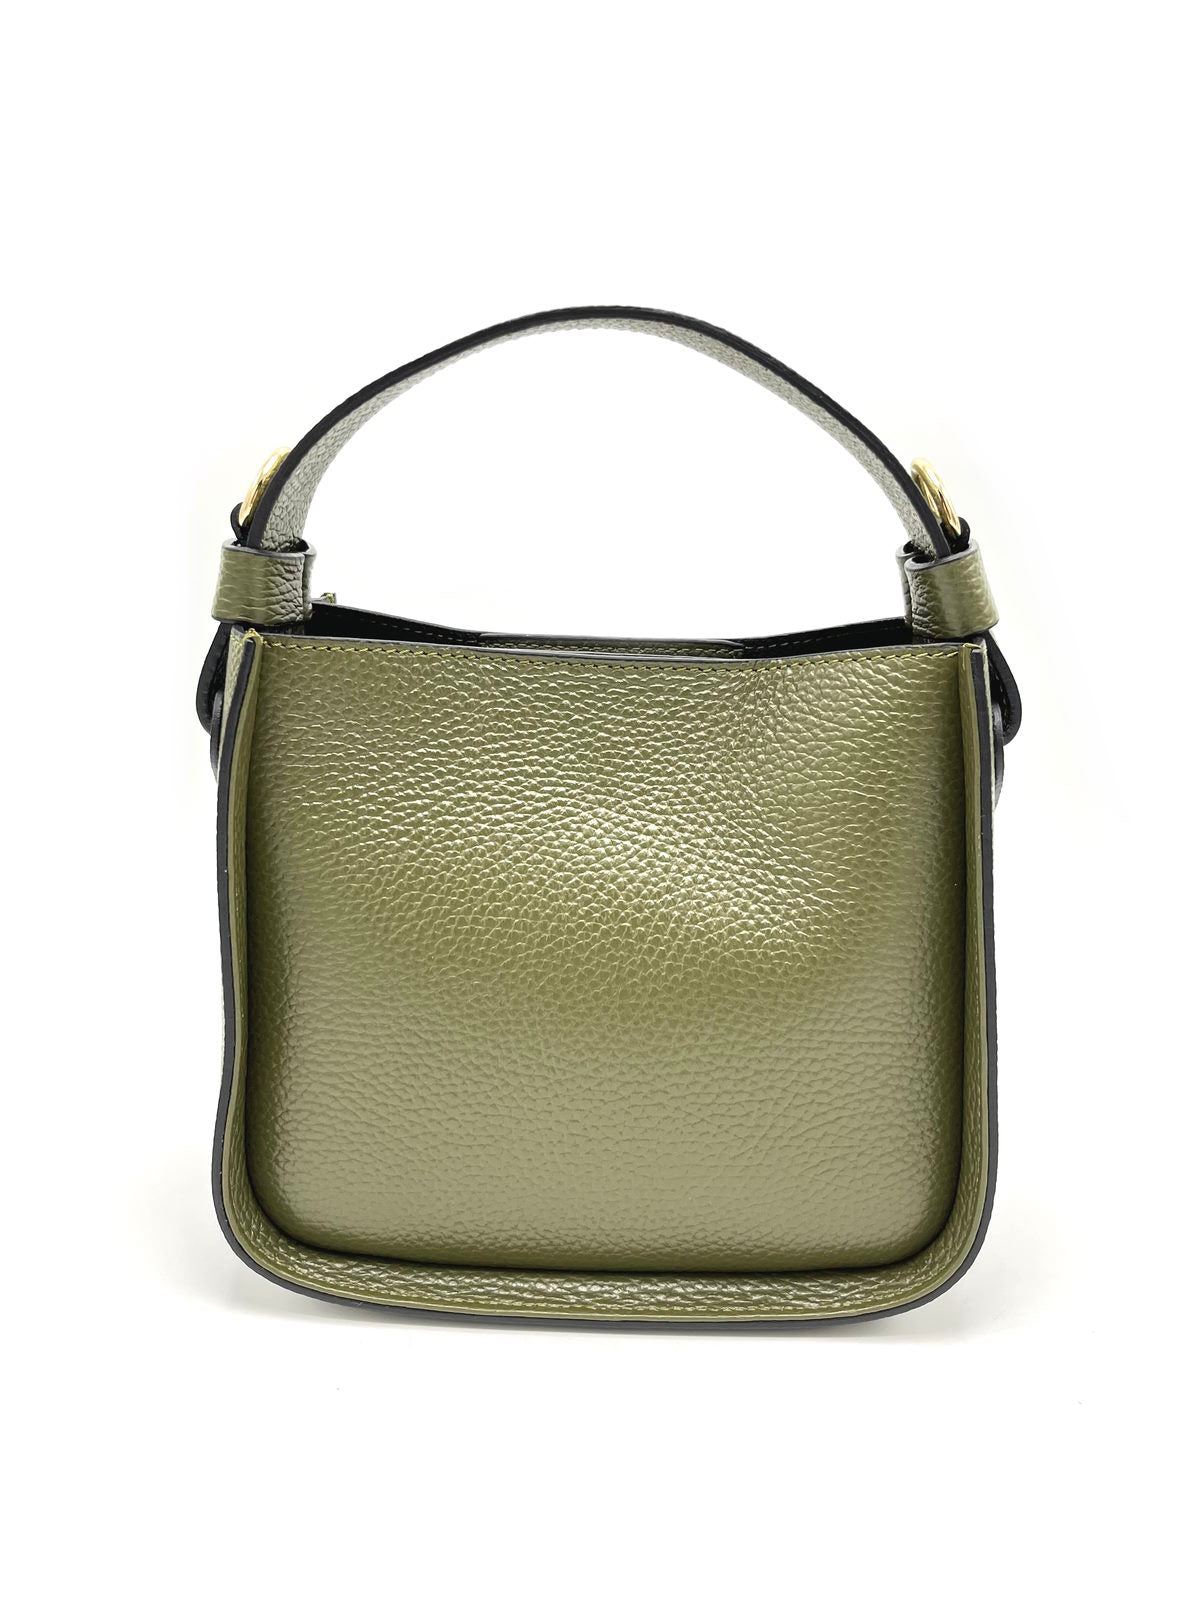 Genuine leather handbag, Made in Italy, art. 112303